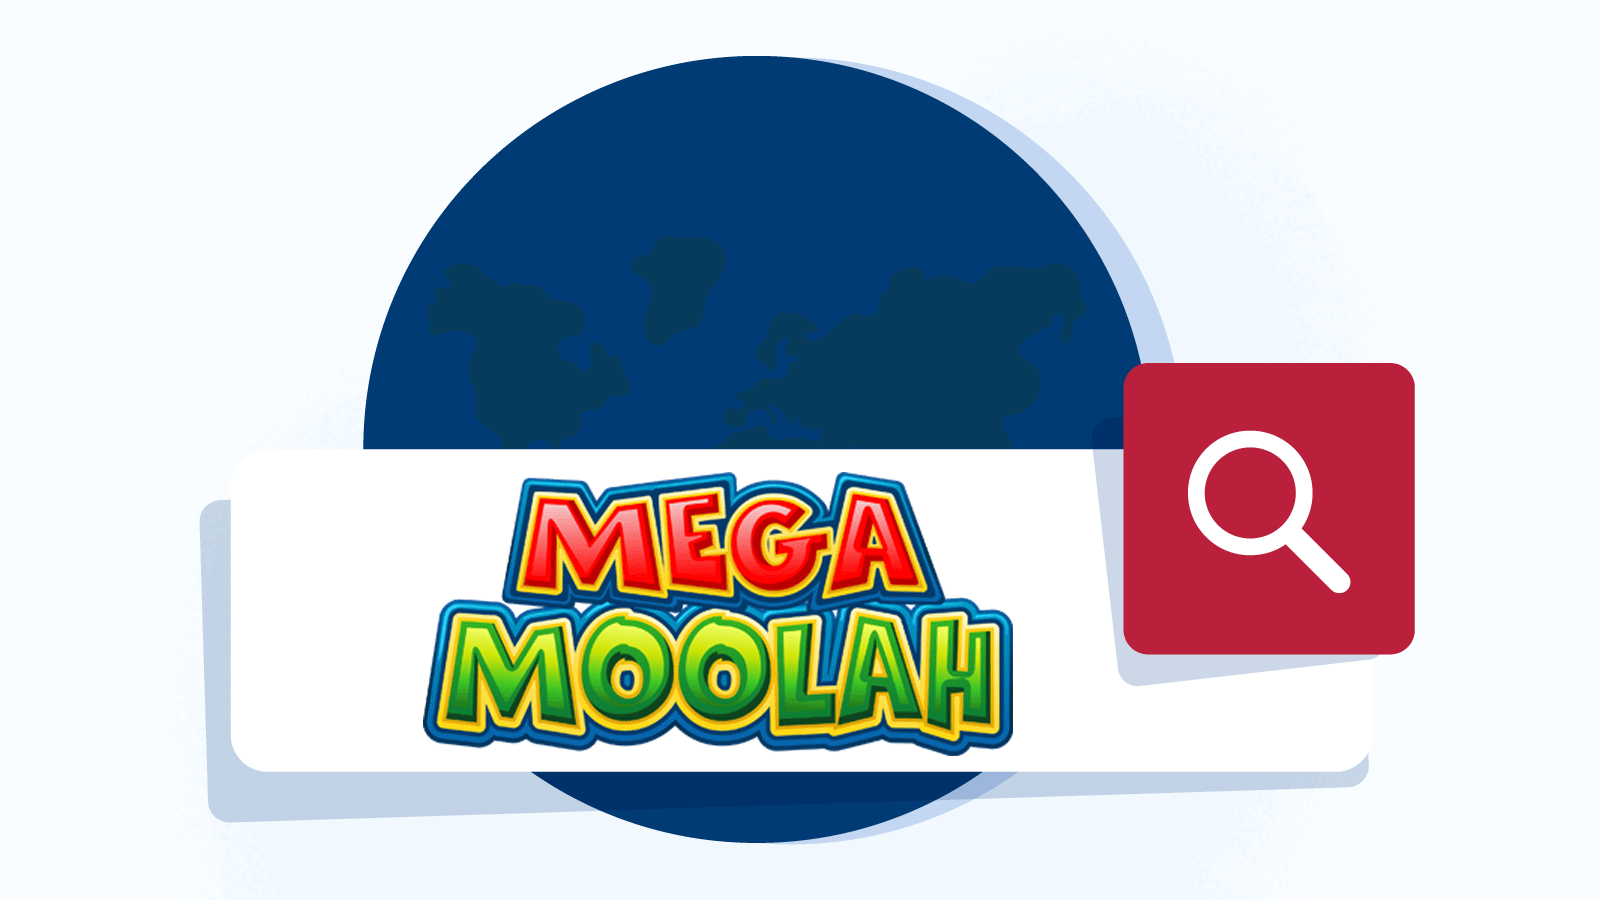 Microgaming Slots in the Mega Moolah Network